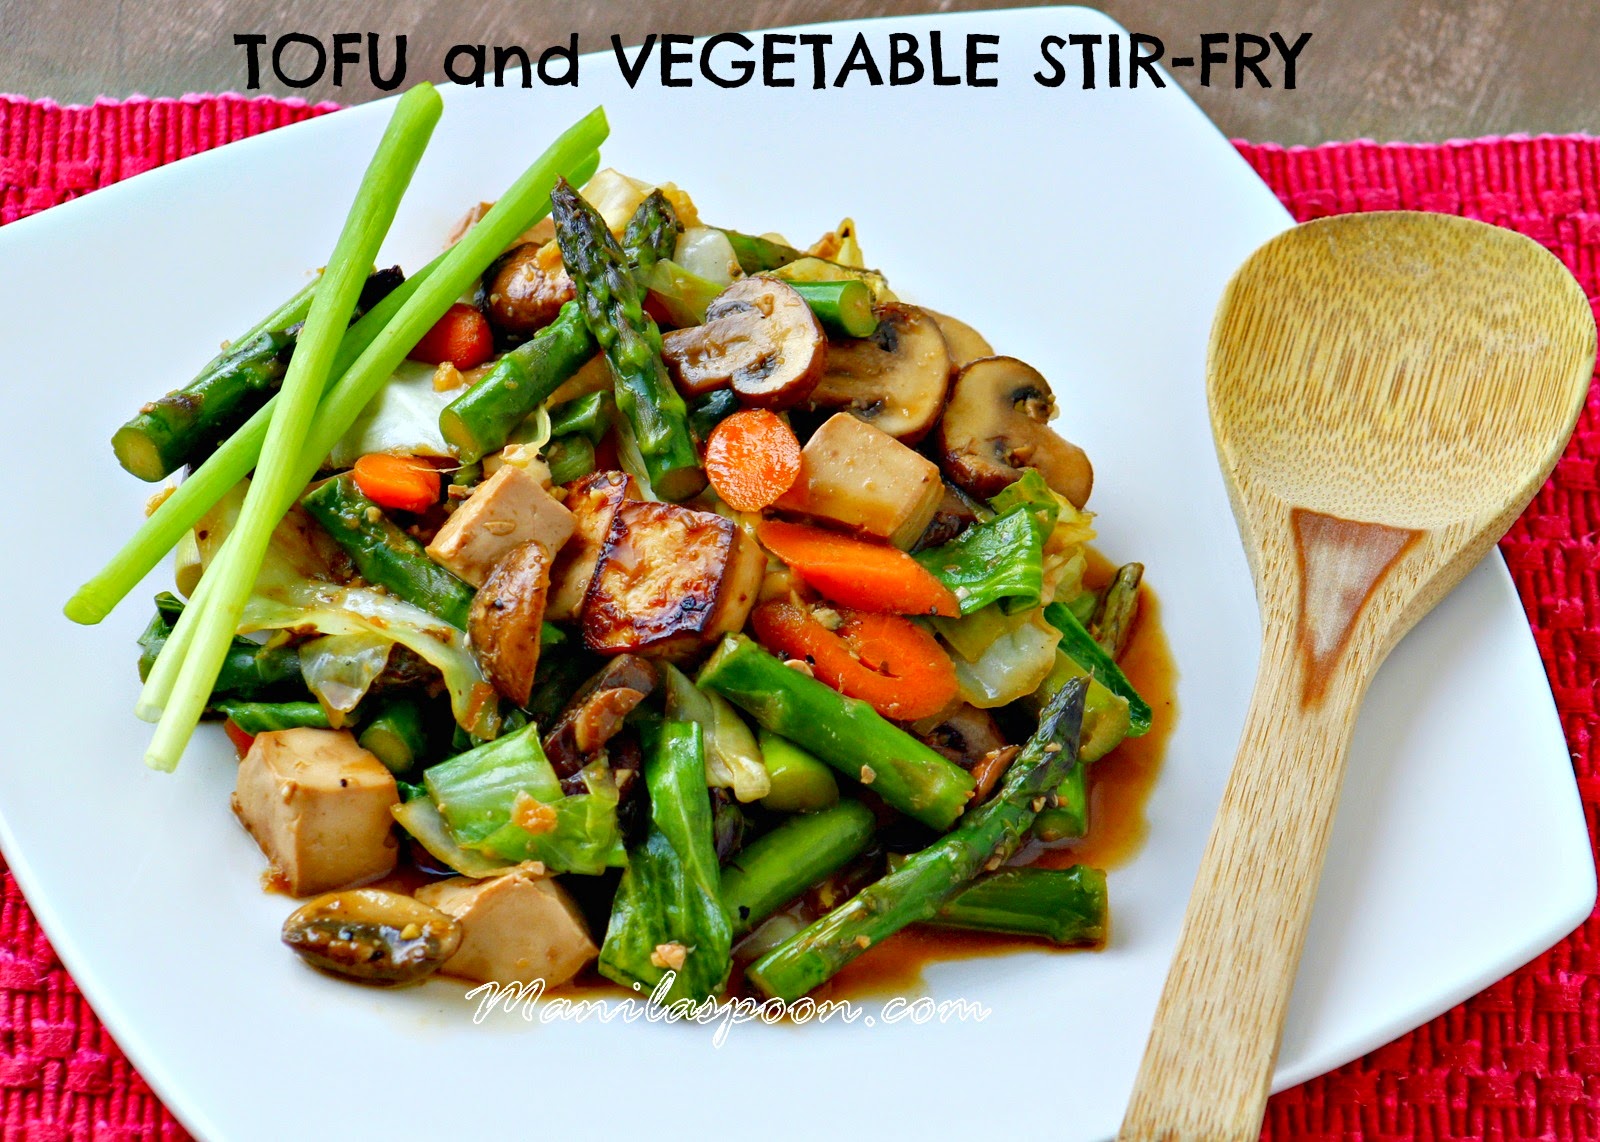 Tofu and Vegetable Stir-fry